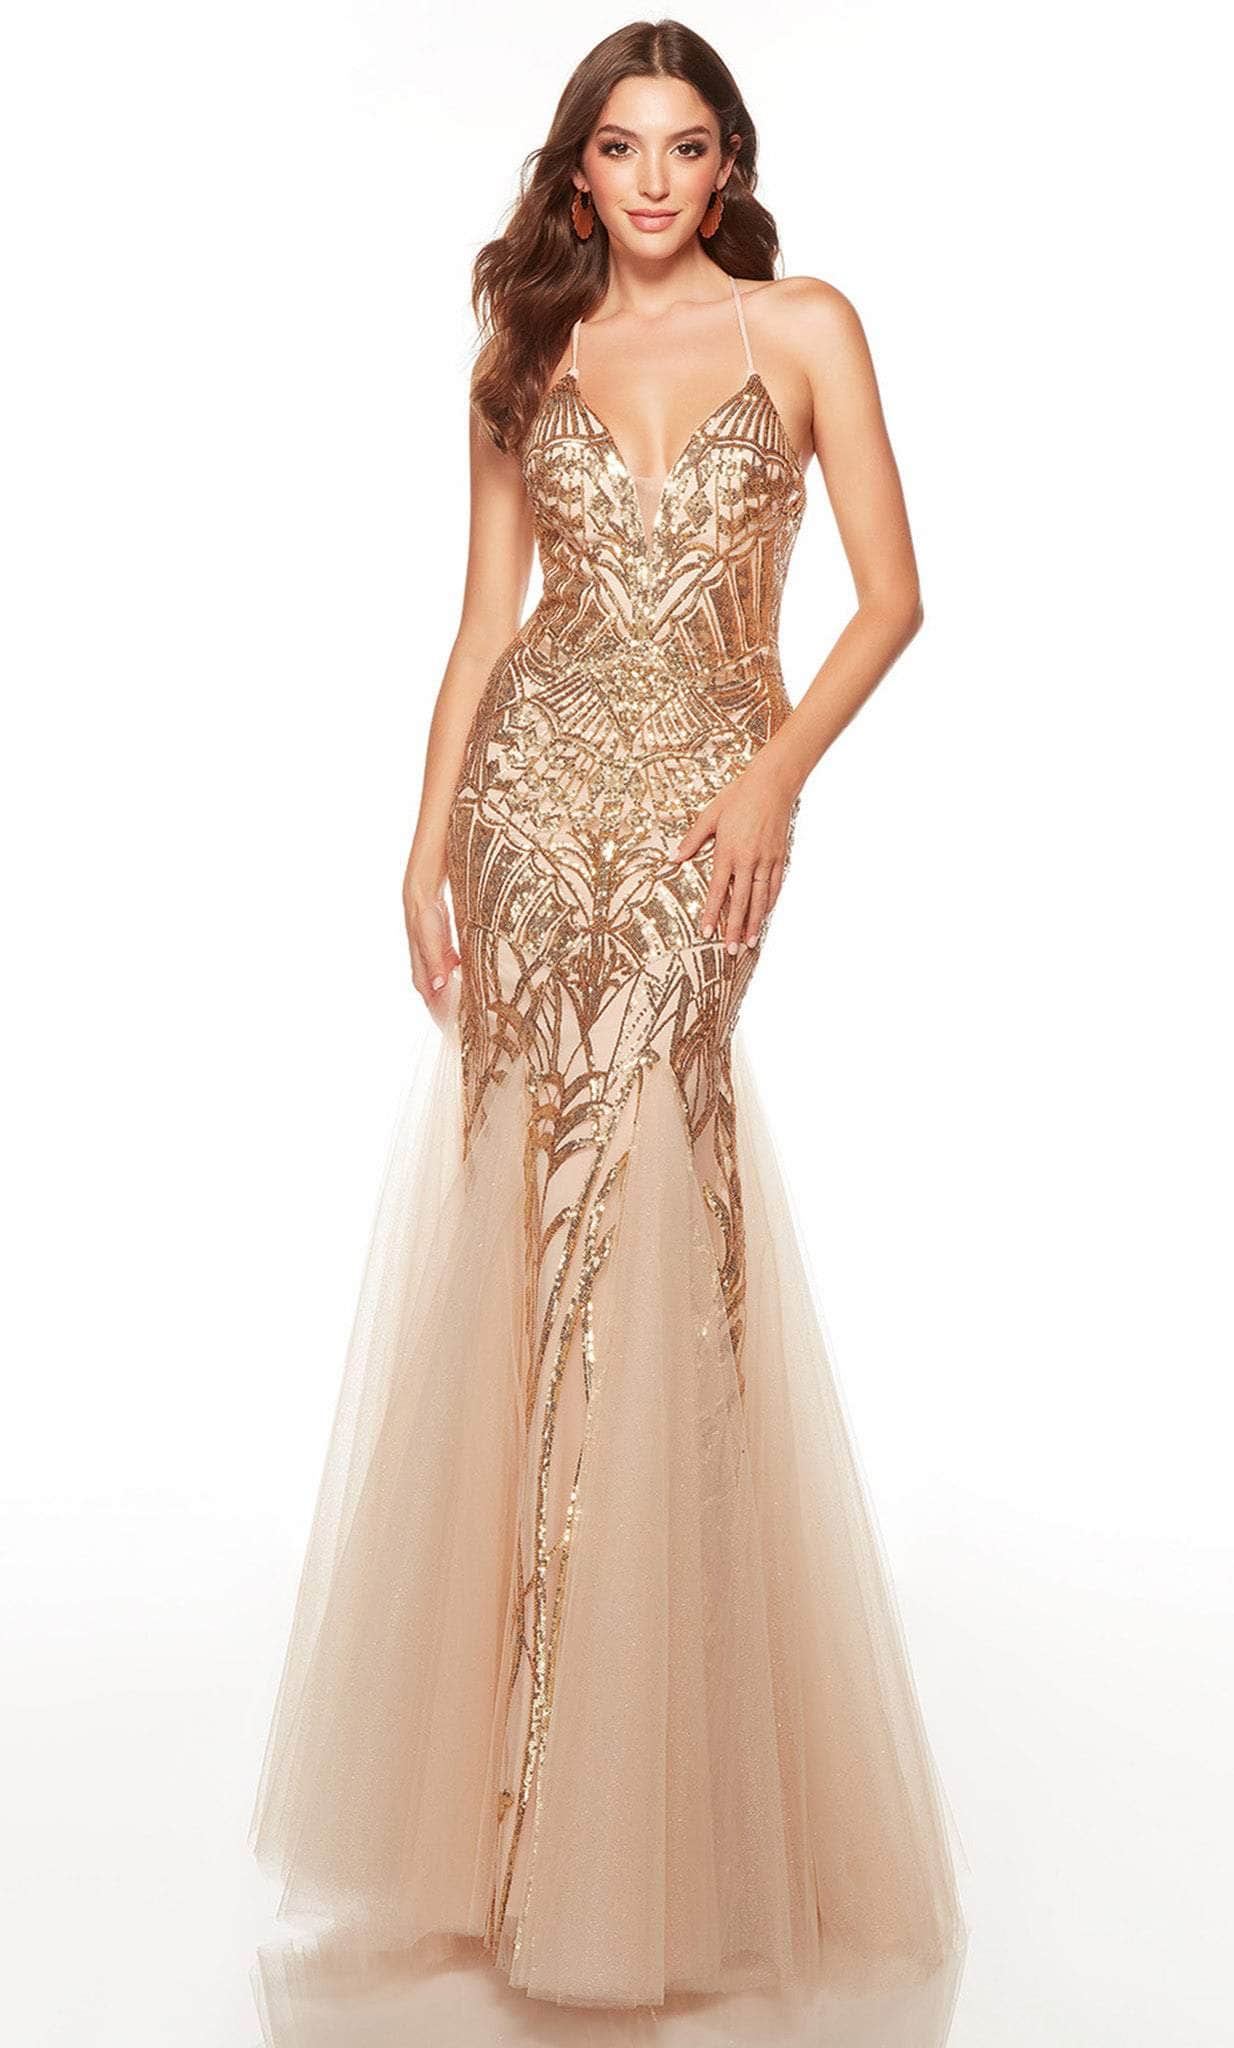 Alyce Paris 61411 - Sleeveless Mermaid Dress Evening Dresses 000 / Gold